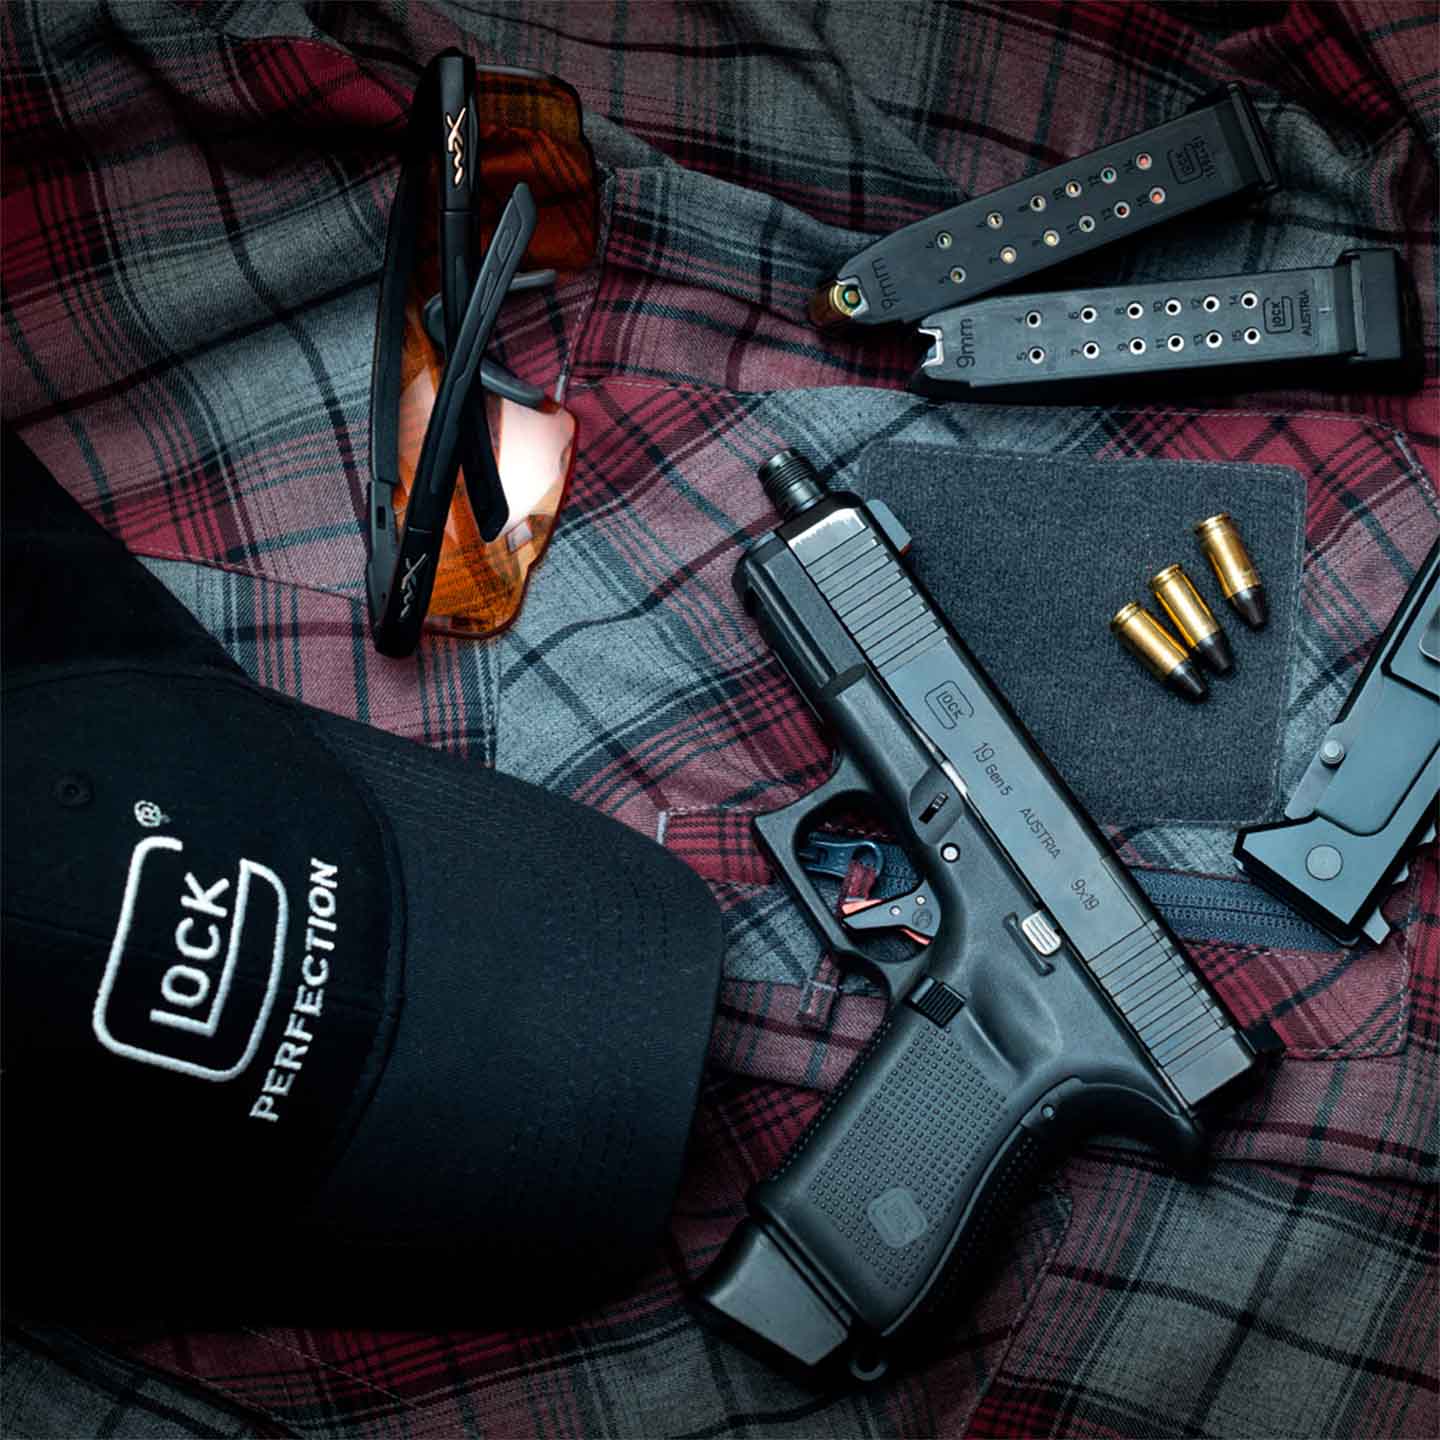 Glock pistol, ammo, safety glasses and Glock hat